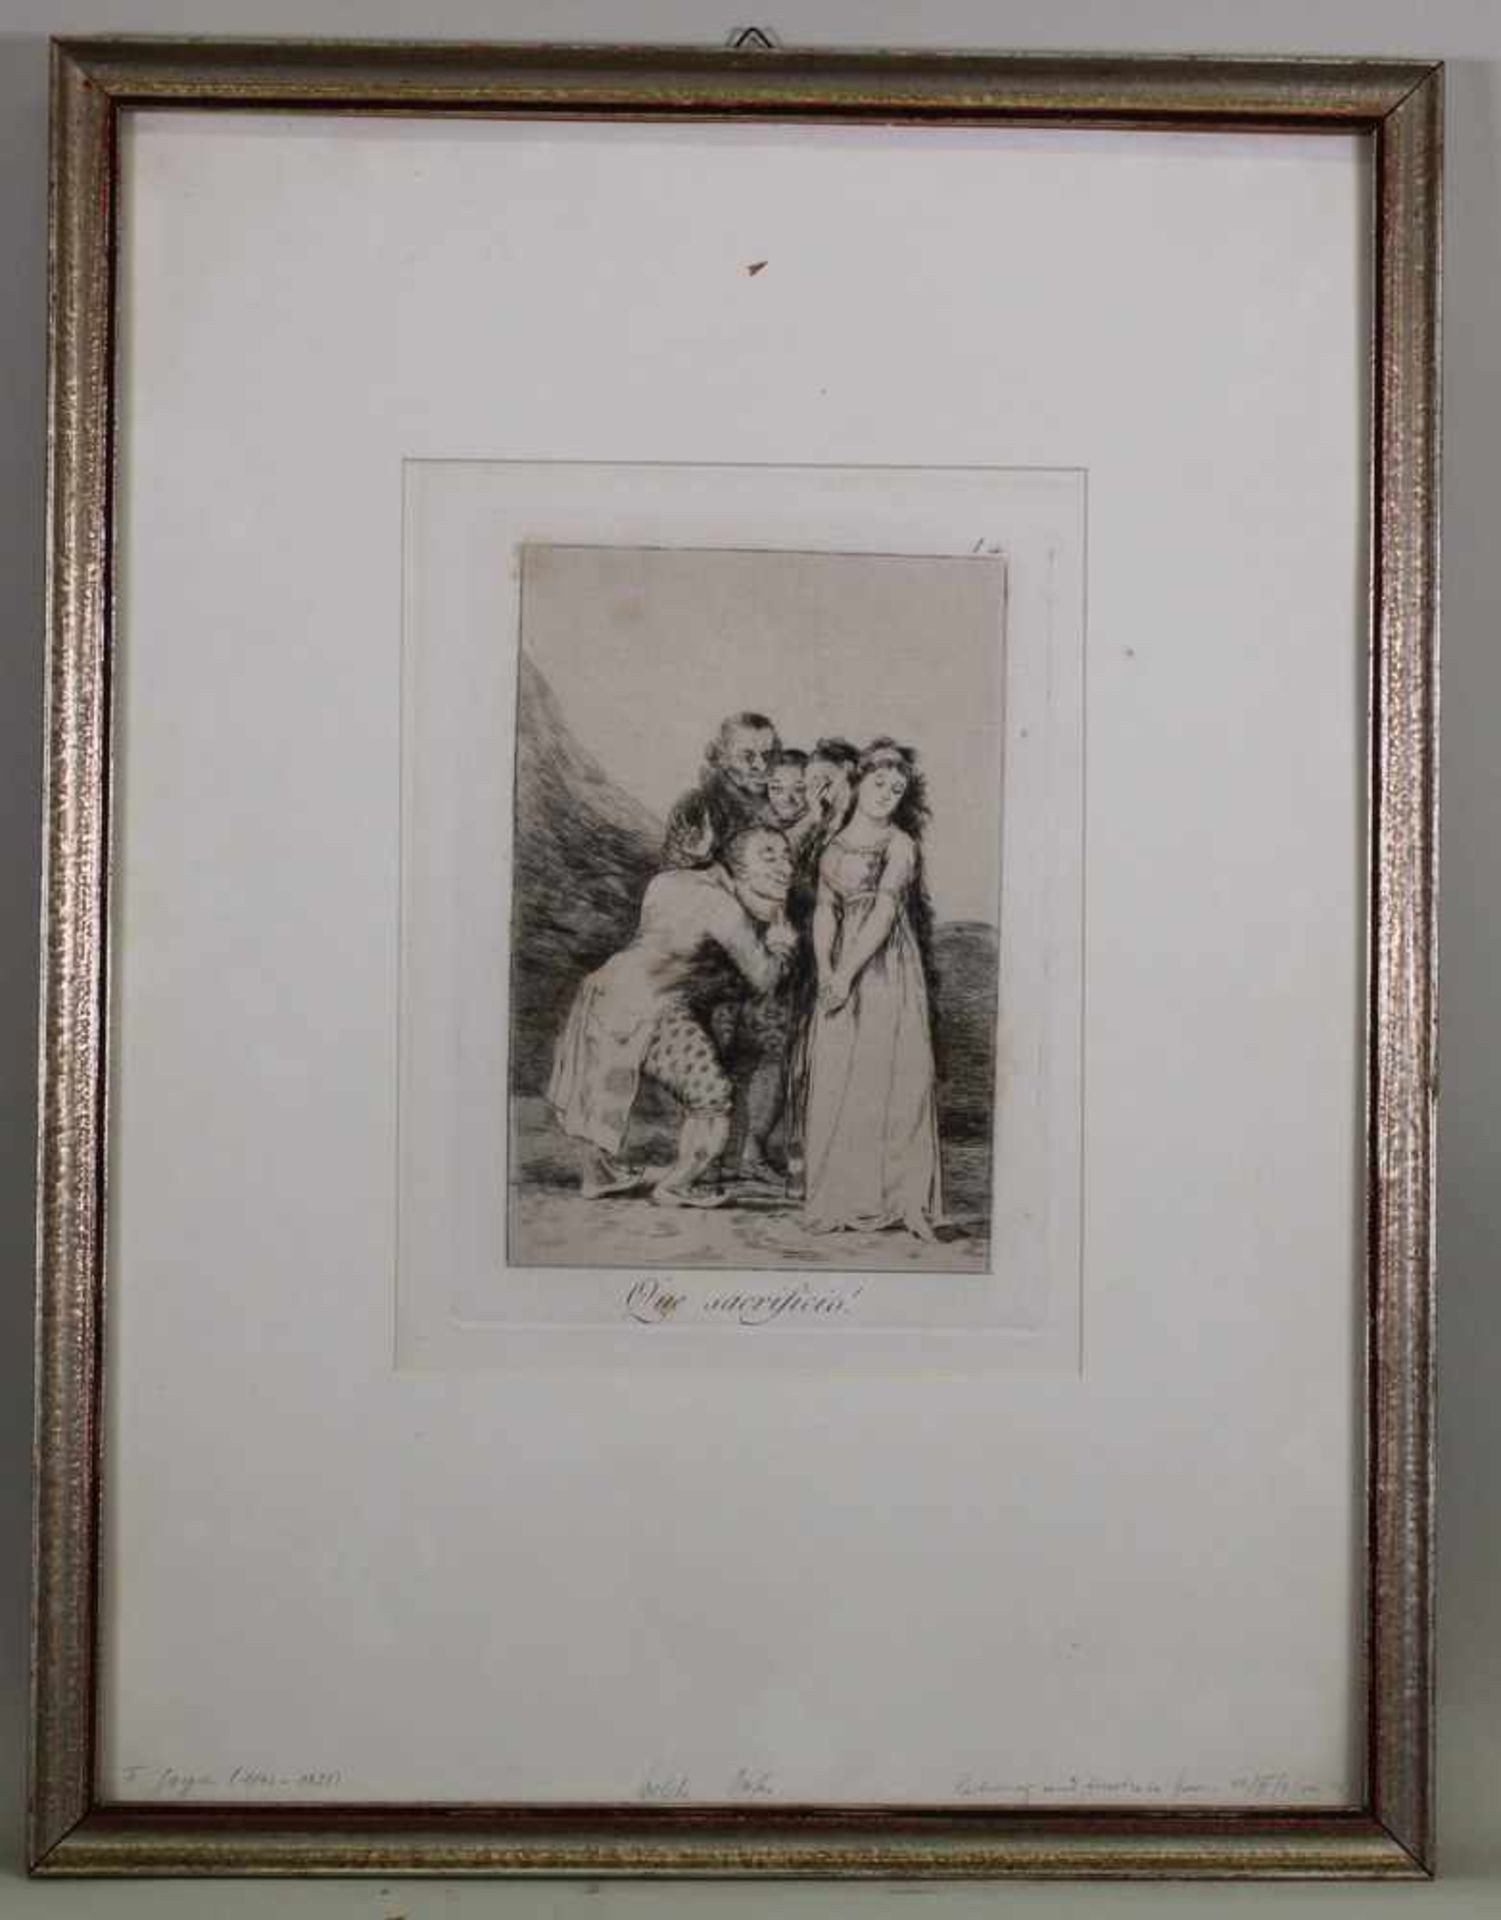 Radierung, "Que sacrificia", Blatt 14 aus "Los Caprichos", Francisco de Goya, späterer Abzug, 18 x - Image 2 of 2